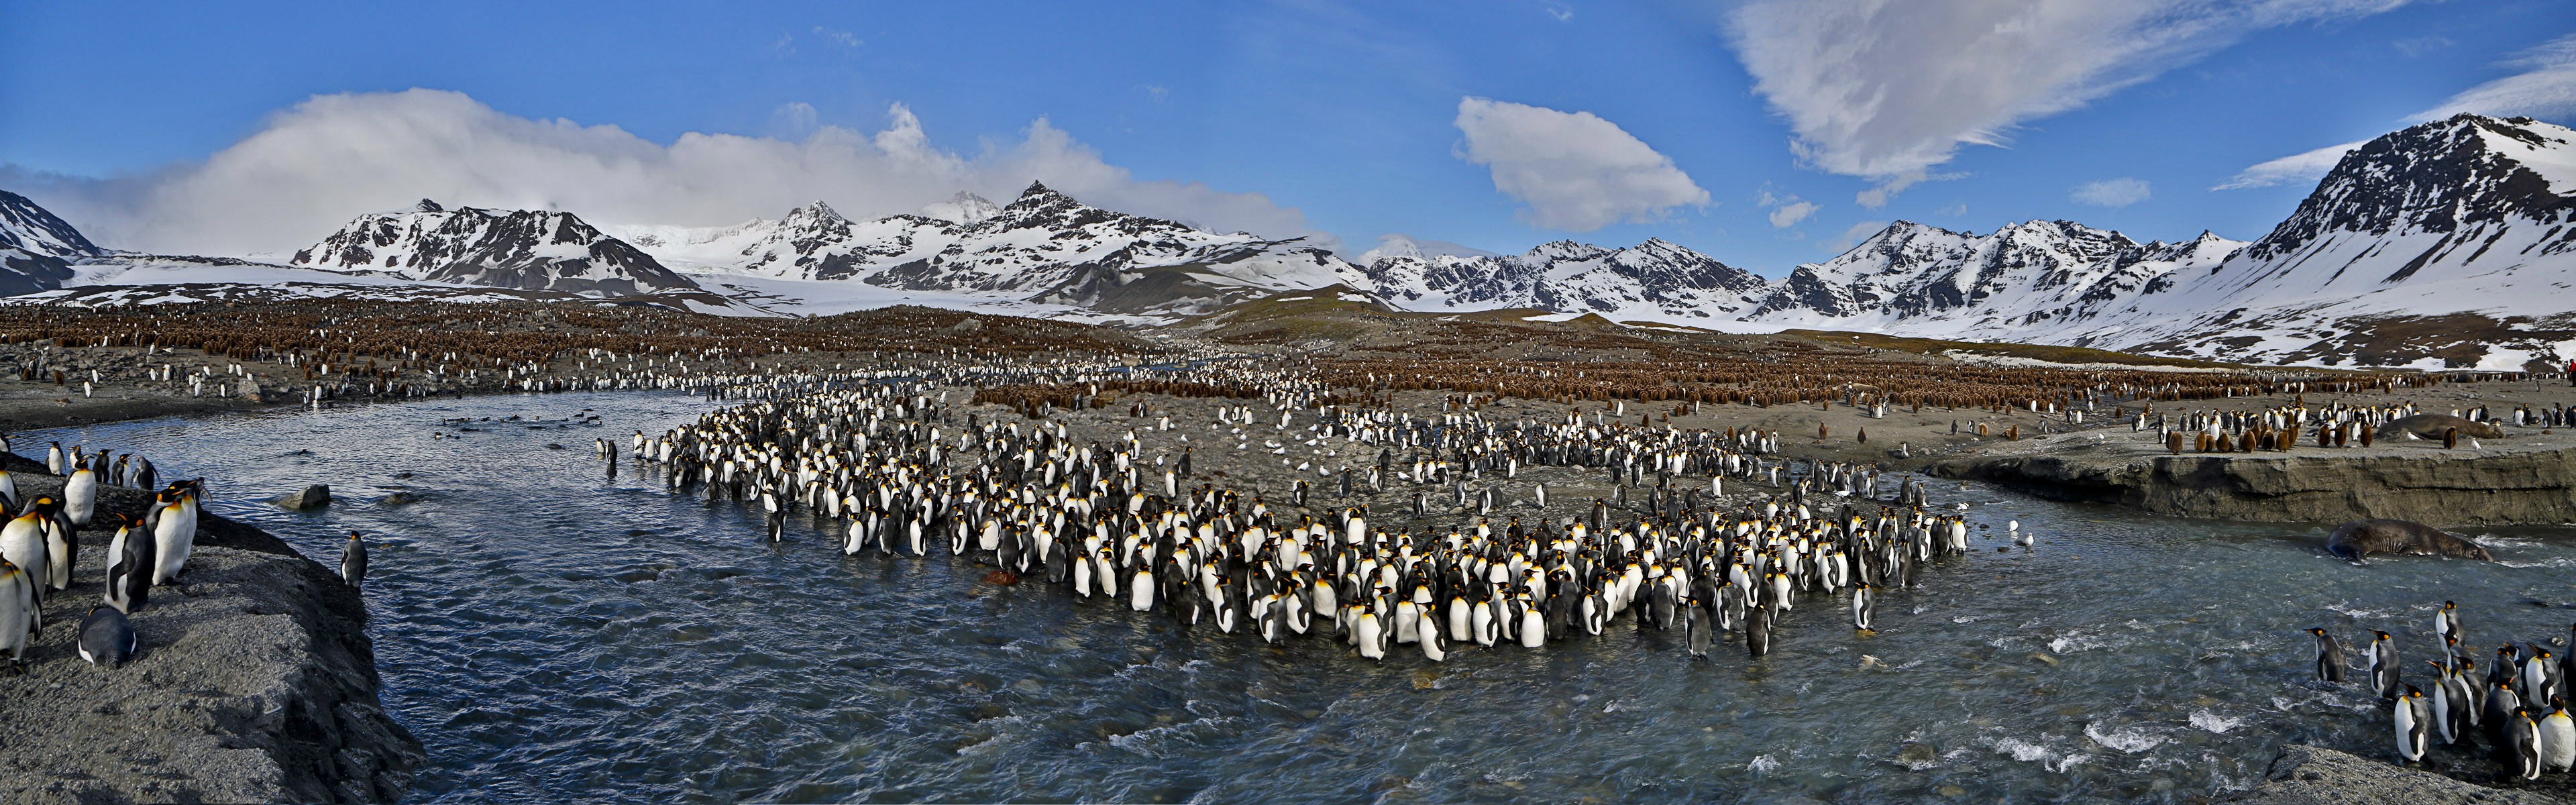 General 3840x1200 nature animals wildlife birds penguins landscape